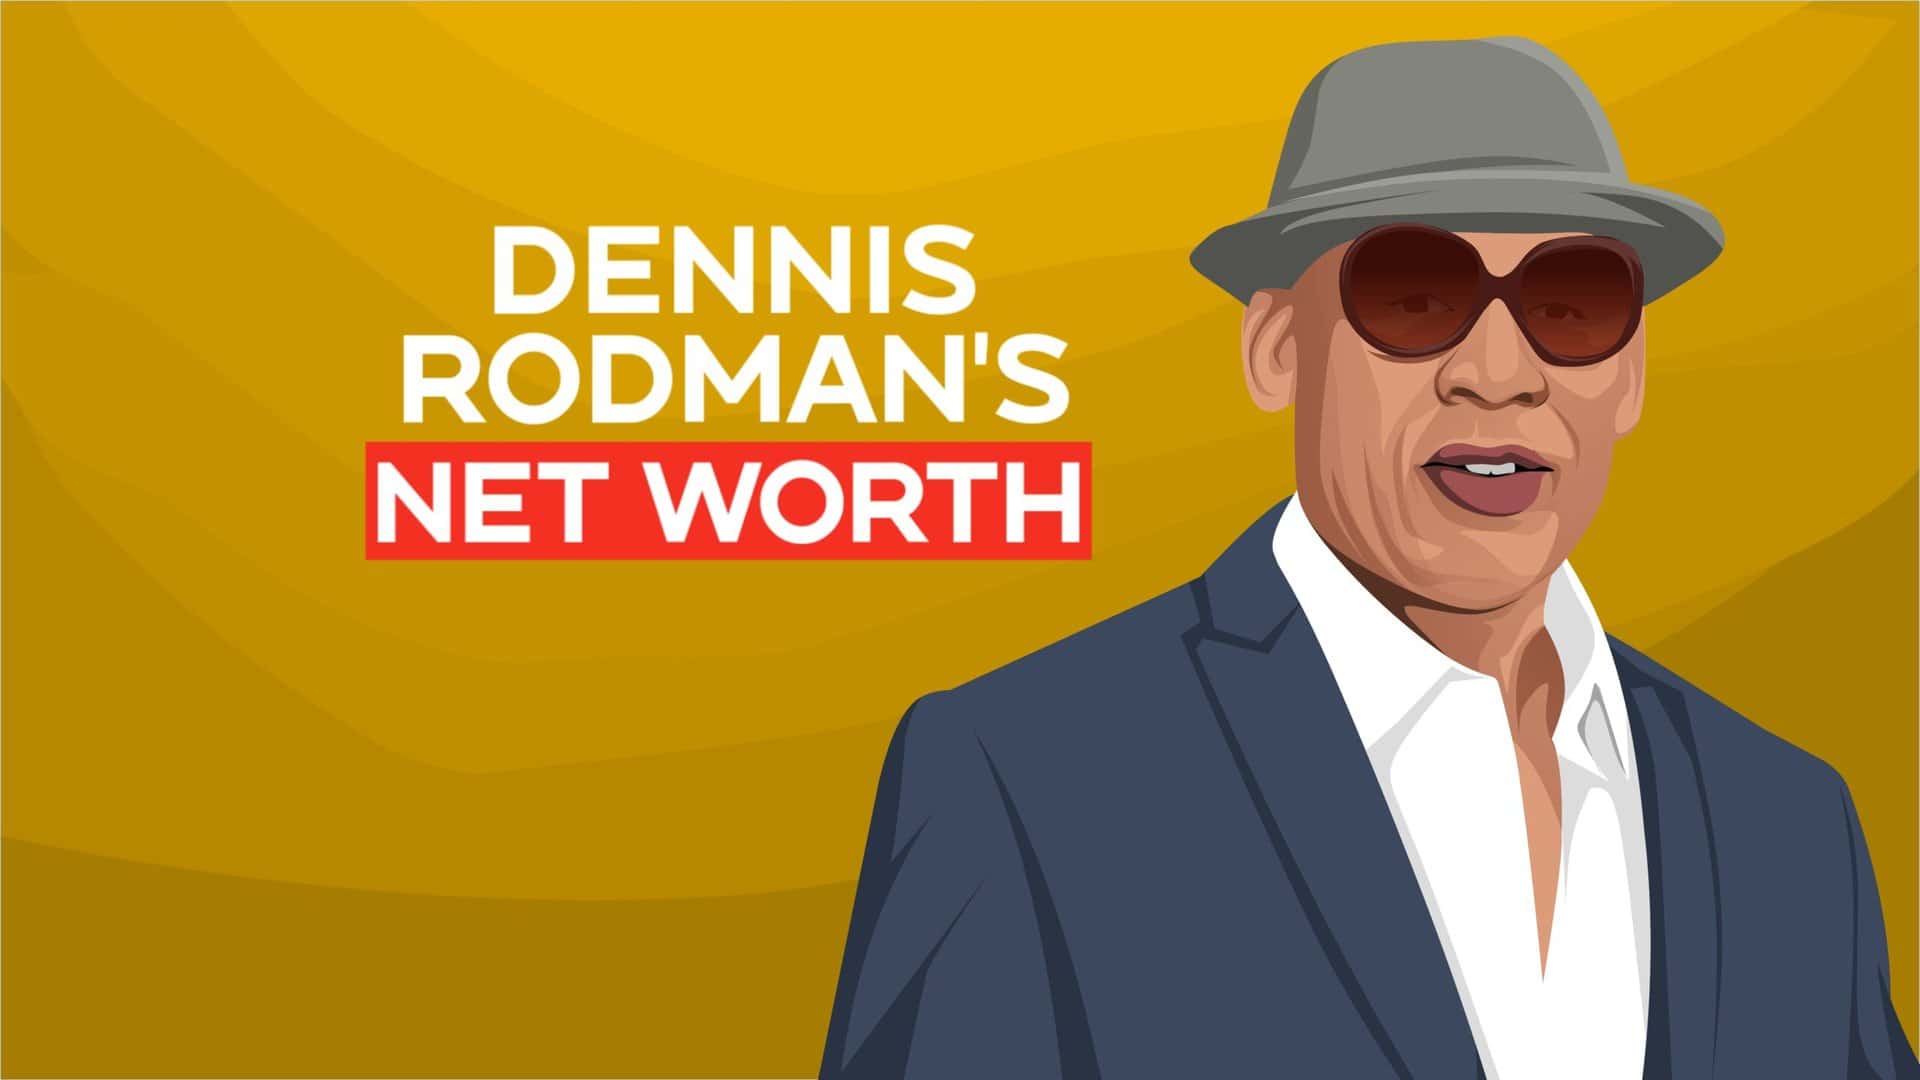 Dennis Rodman's Net Worth and Story